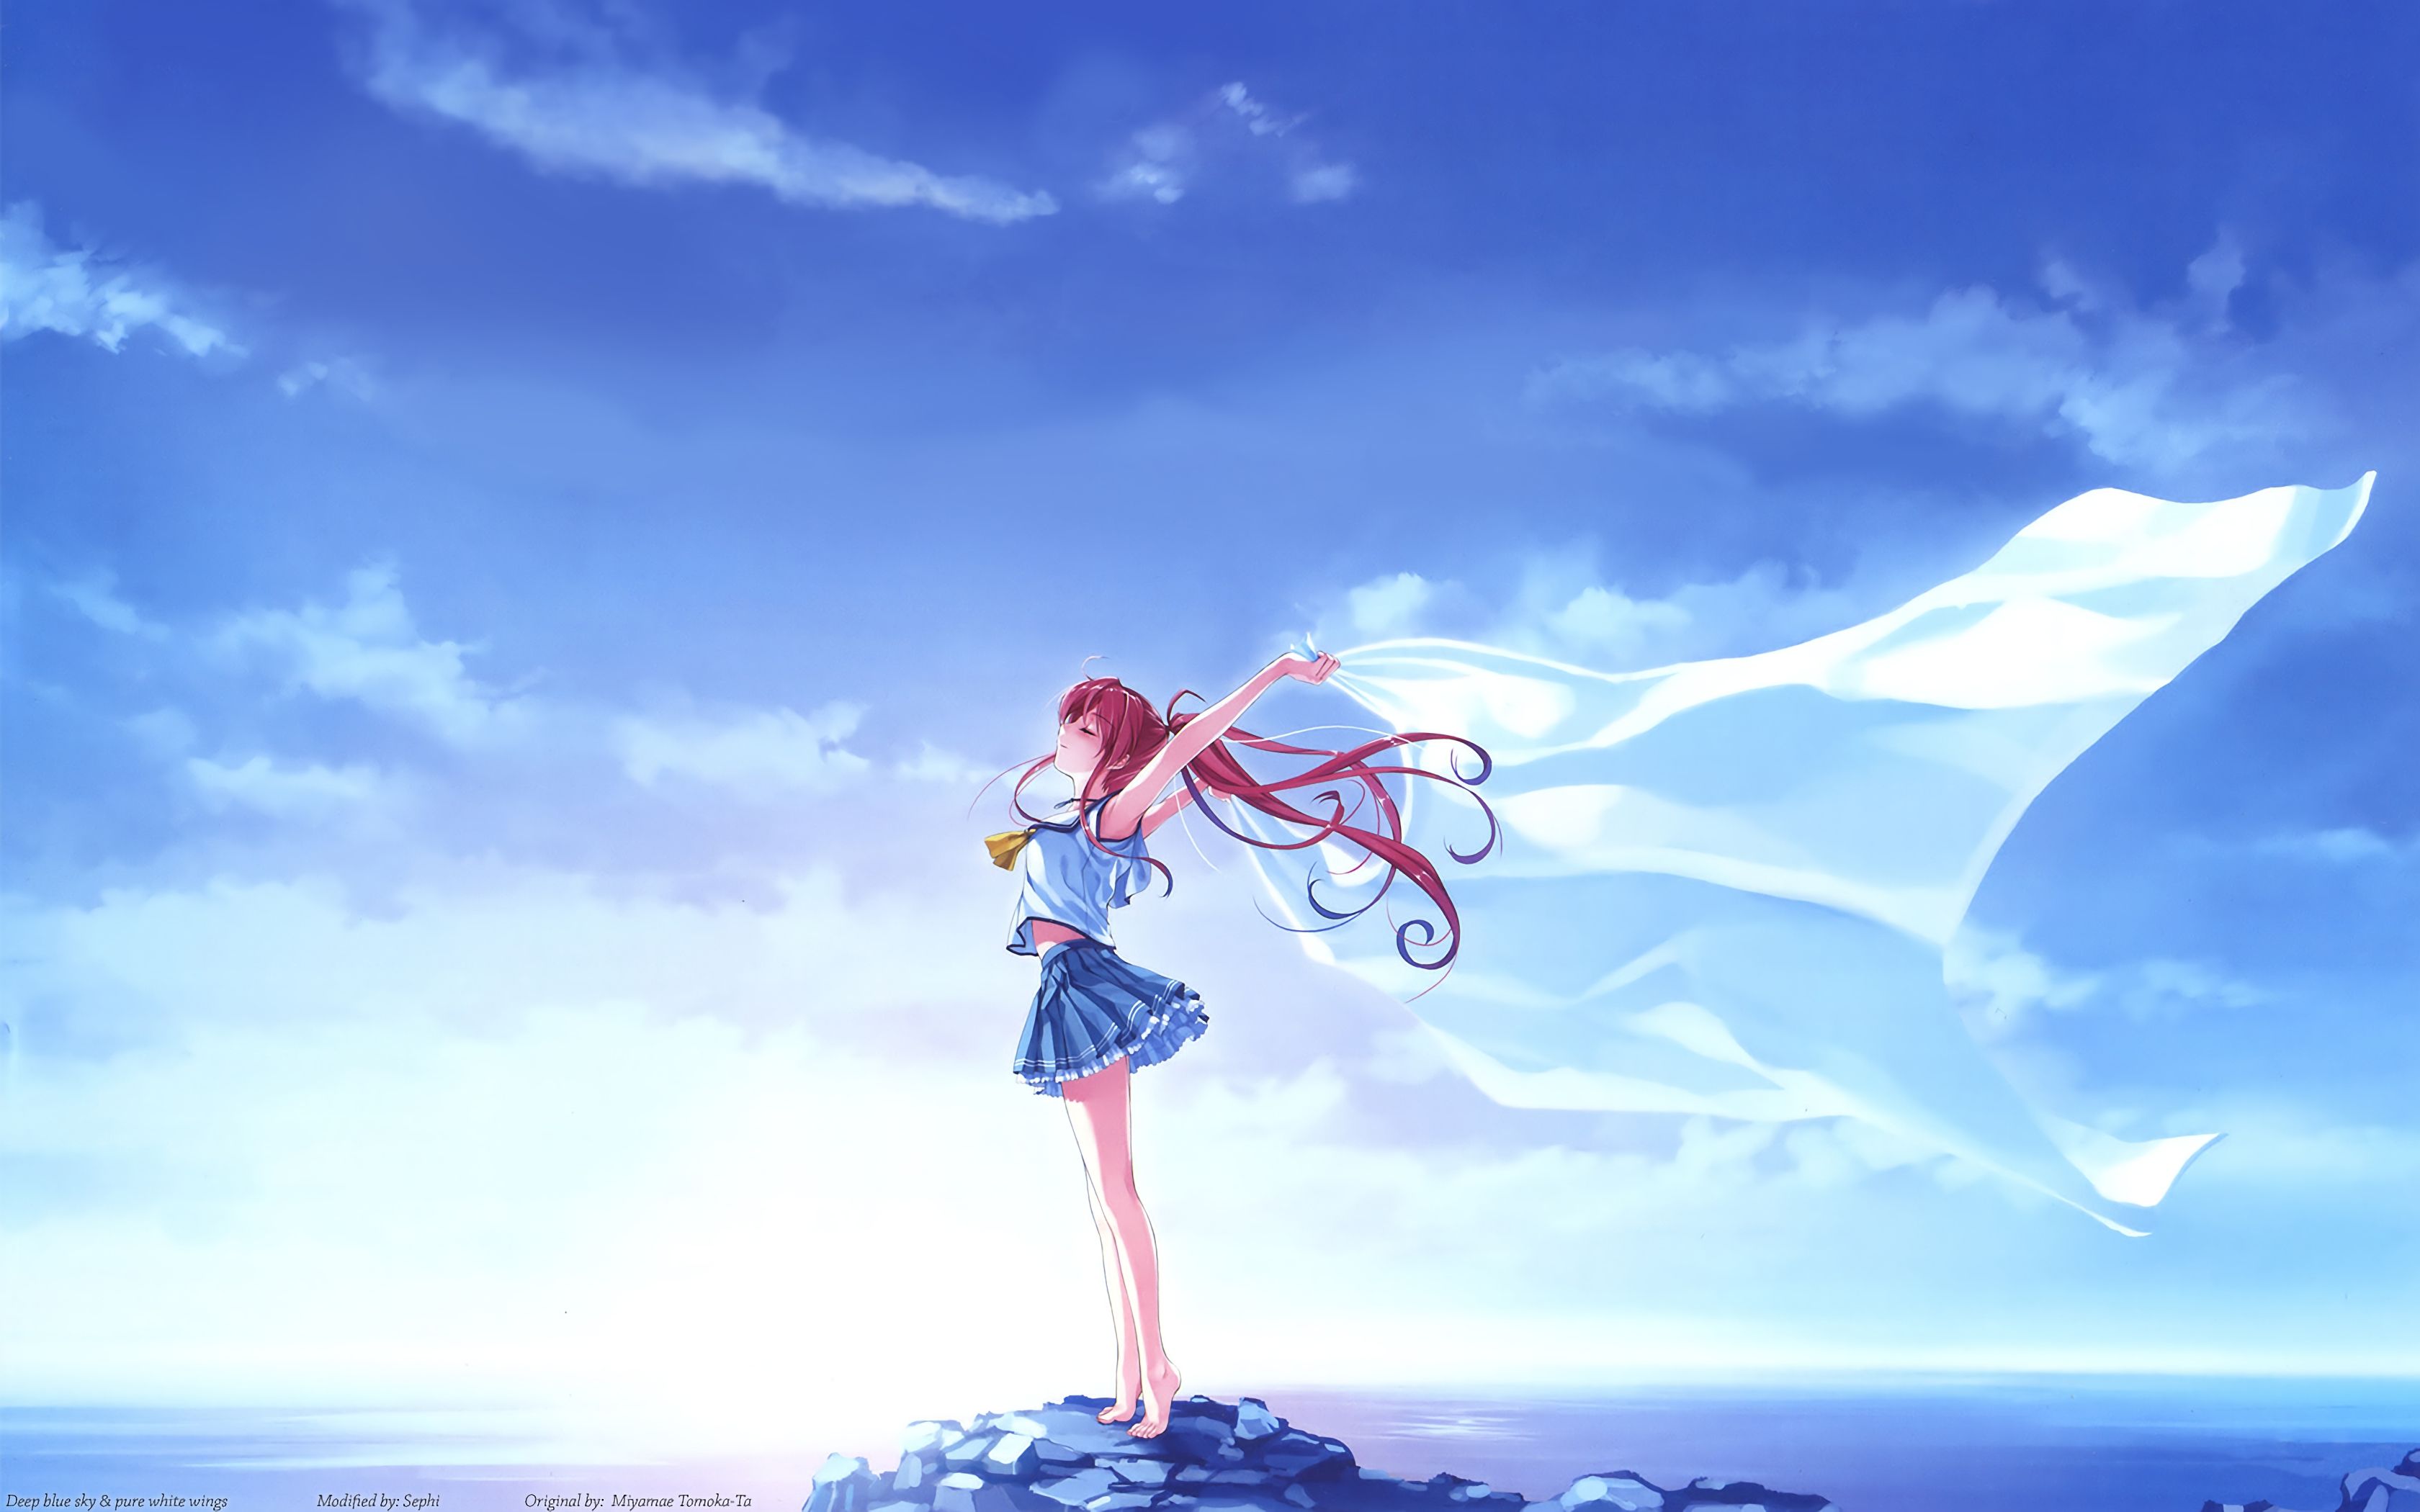 White Clouds Blue Sky Building Aetna Anime Background HD Anime Background  Wallpapers, HD Wallpapers